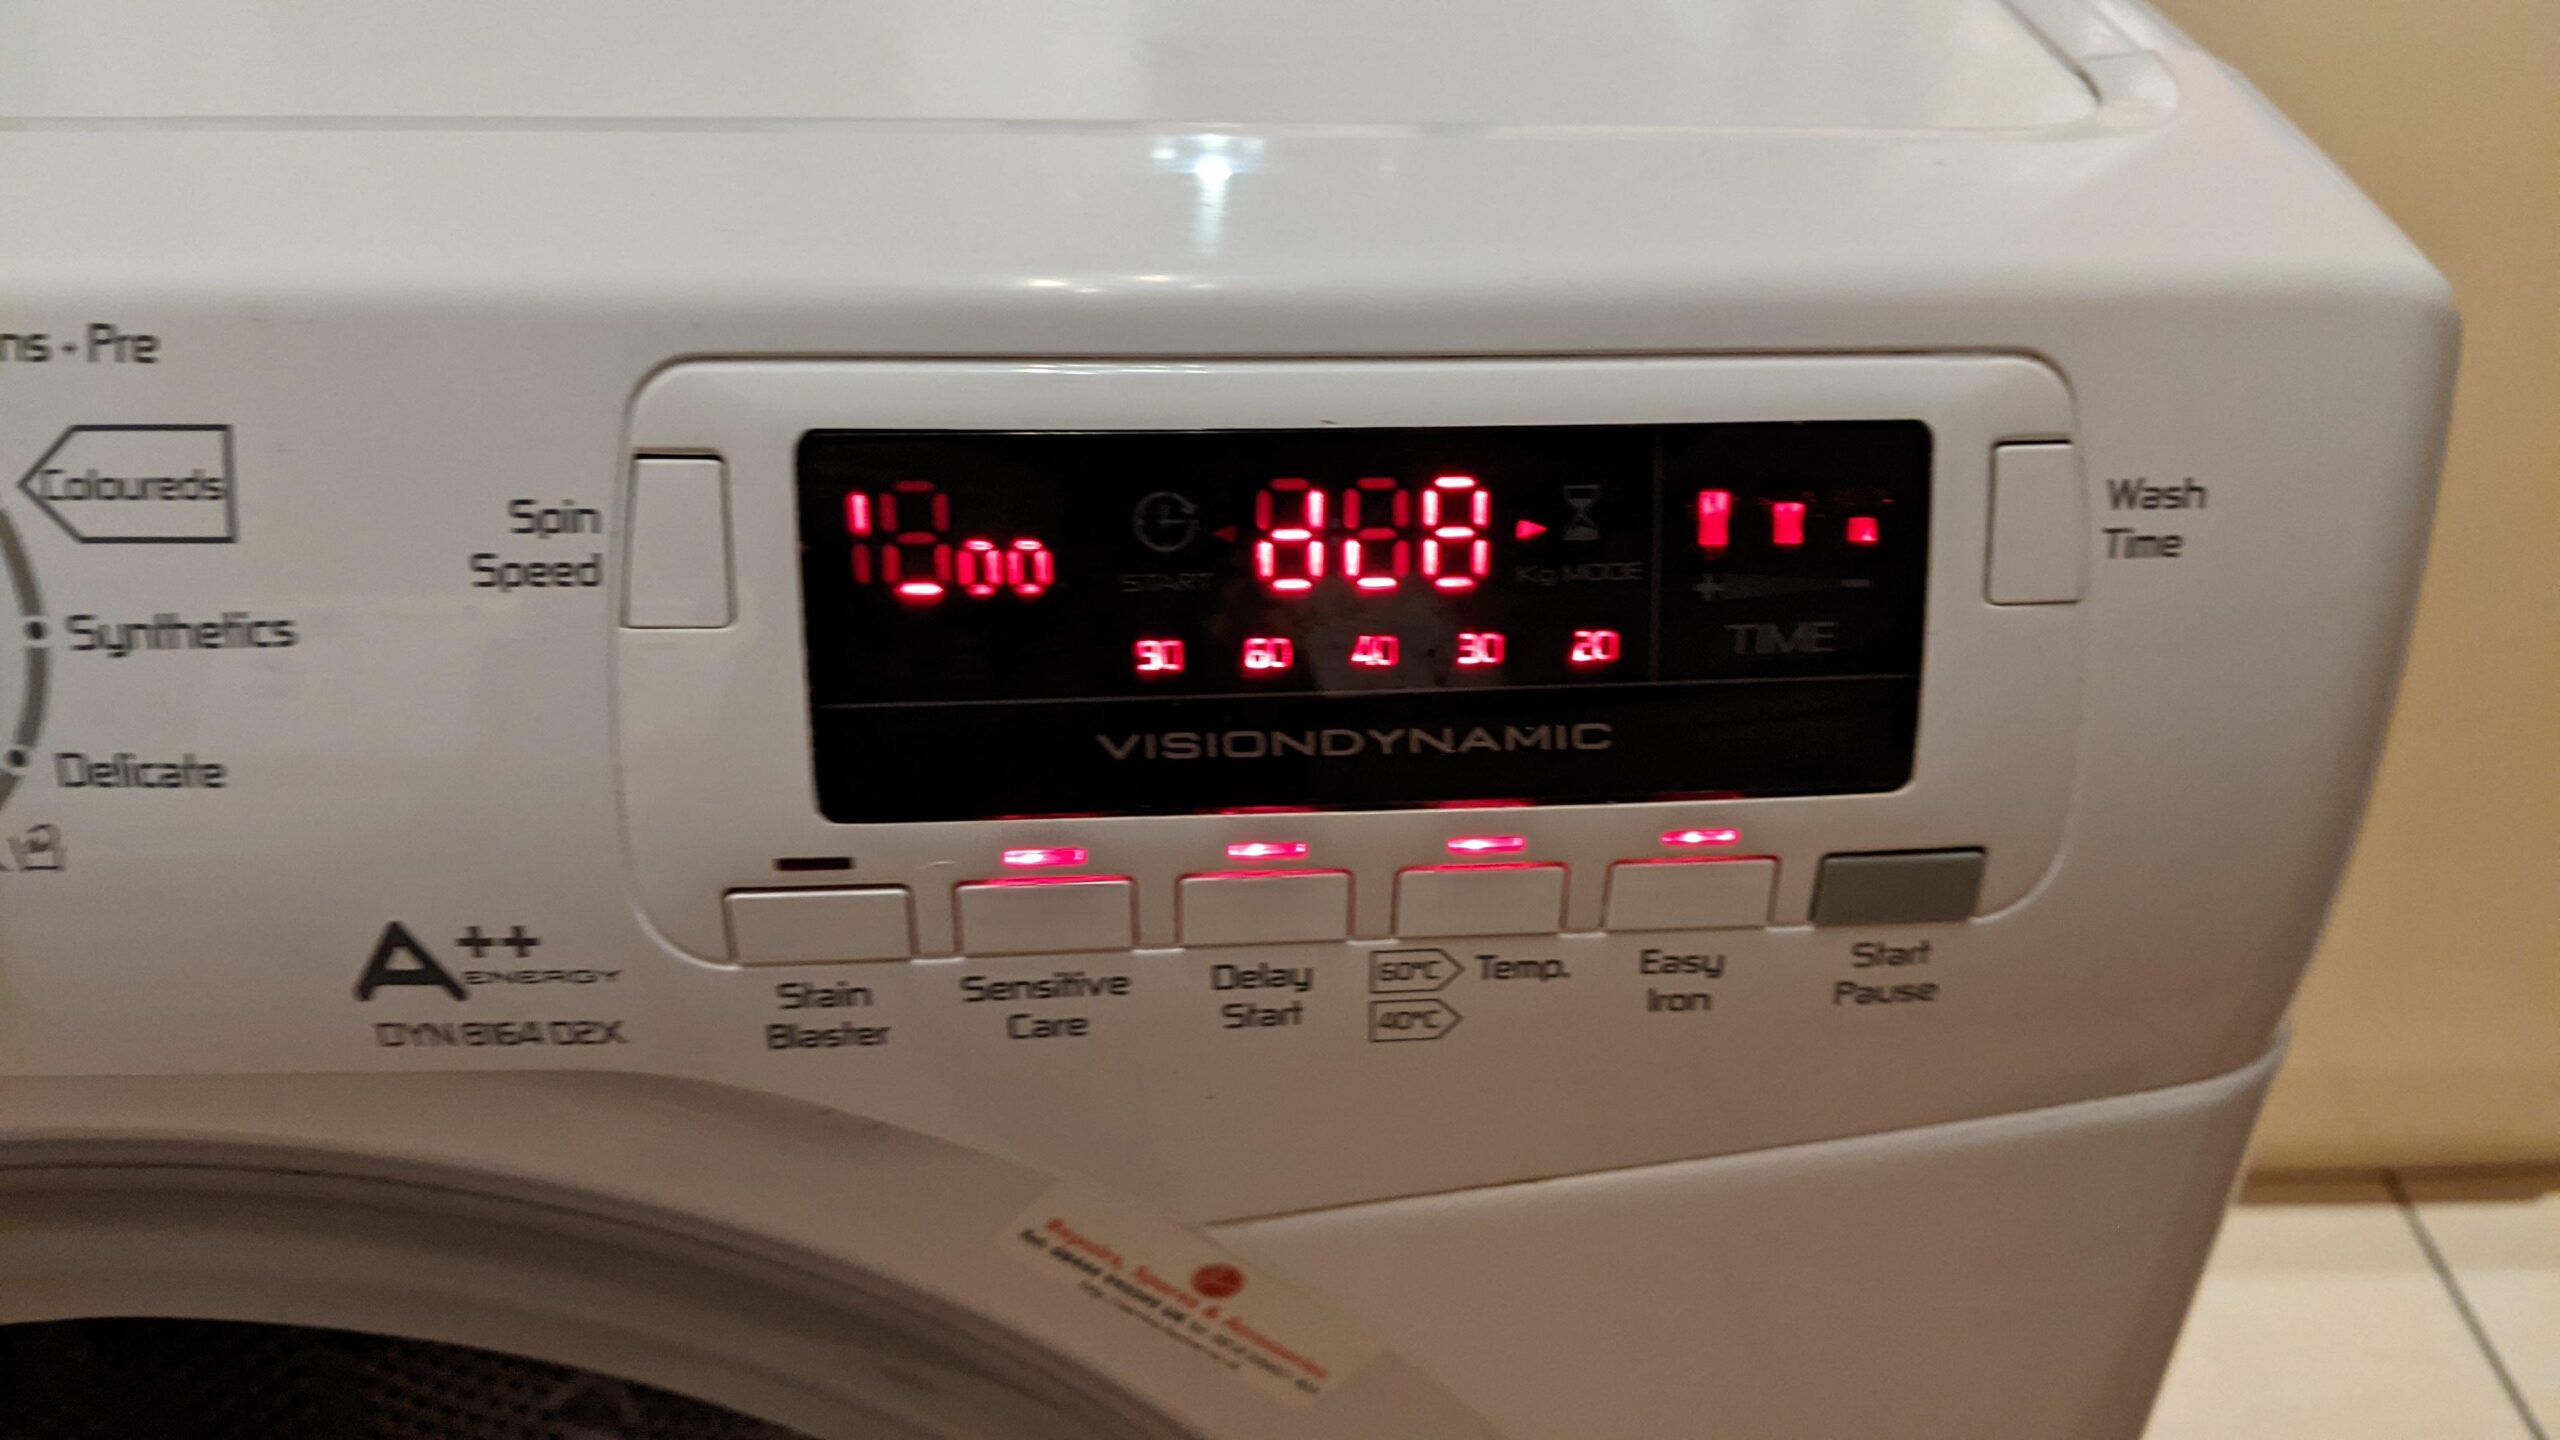 How to Fix Error E08 on Hoover Washing Machine